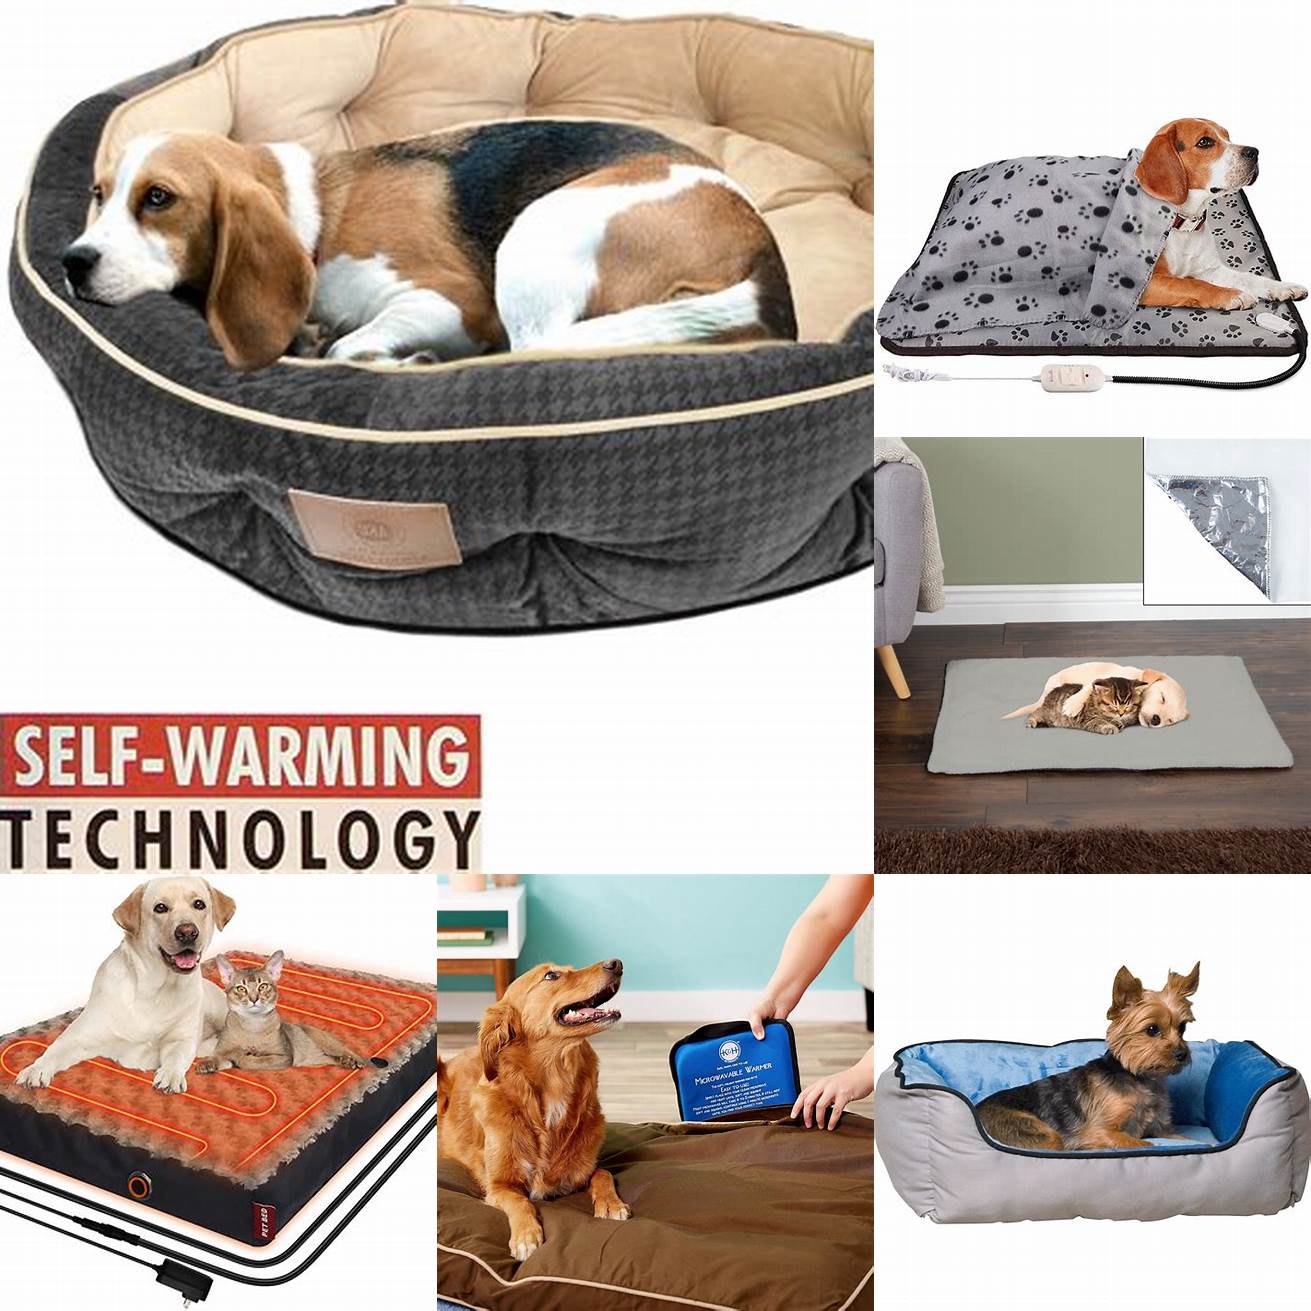 2 Self-Heating Dog Beds